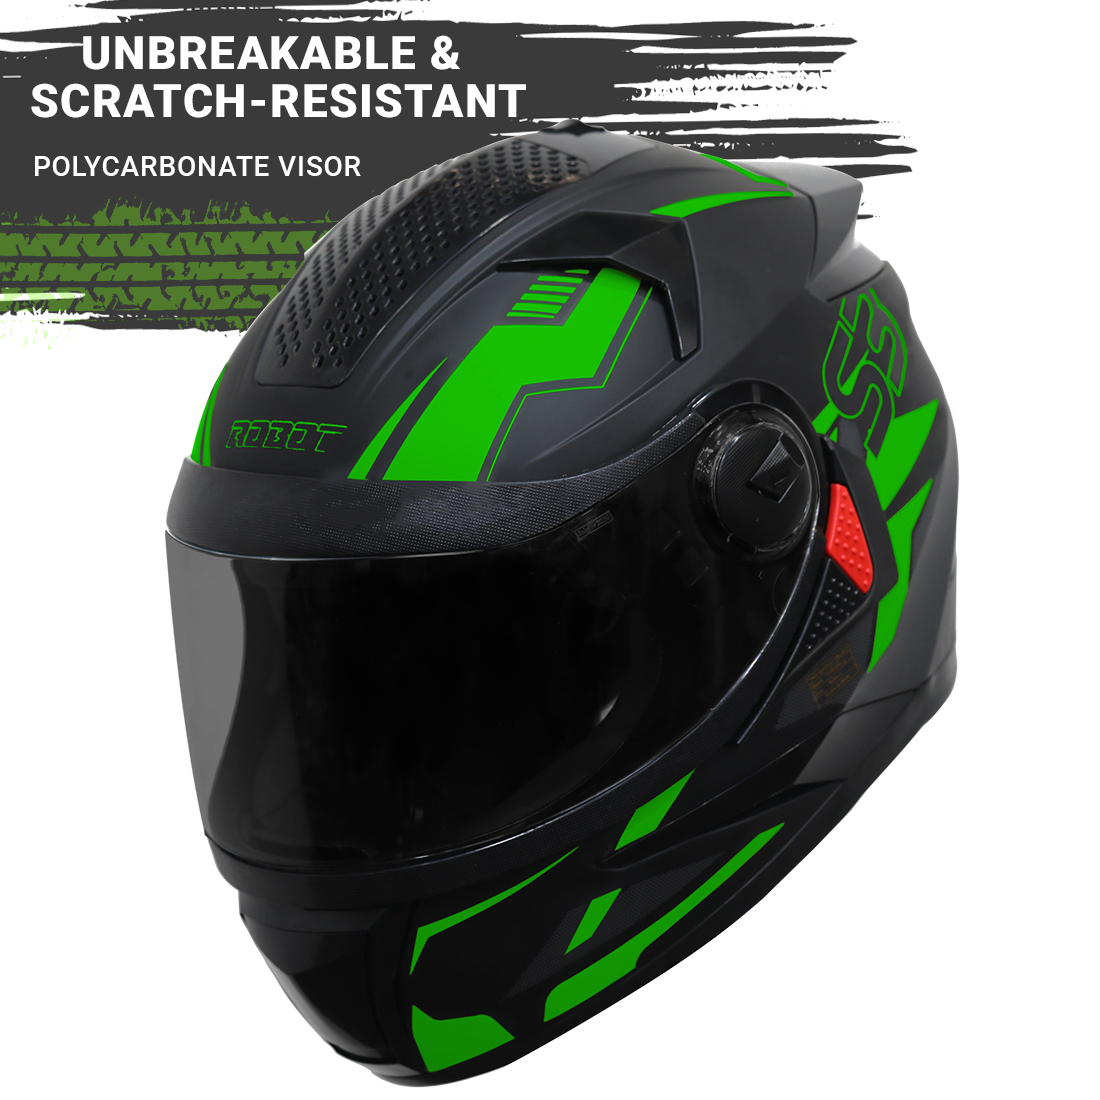 Steelbird SBH-17 Terminator ISI Certified Full Face Graphic Helmet (Matt Black Fluo Green With Smoke Visor)